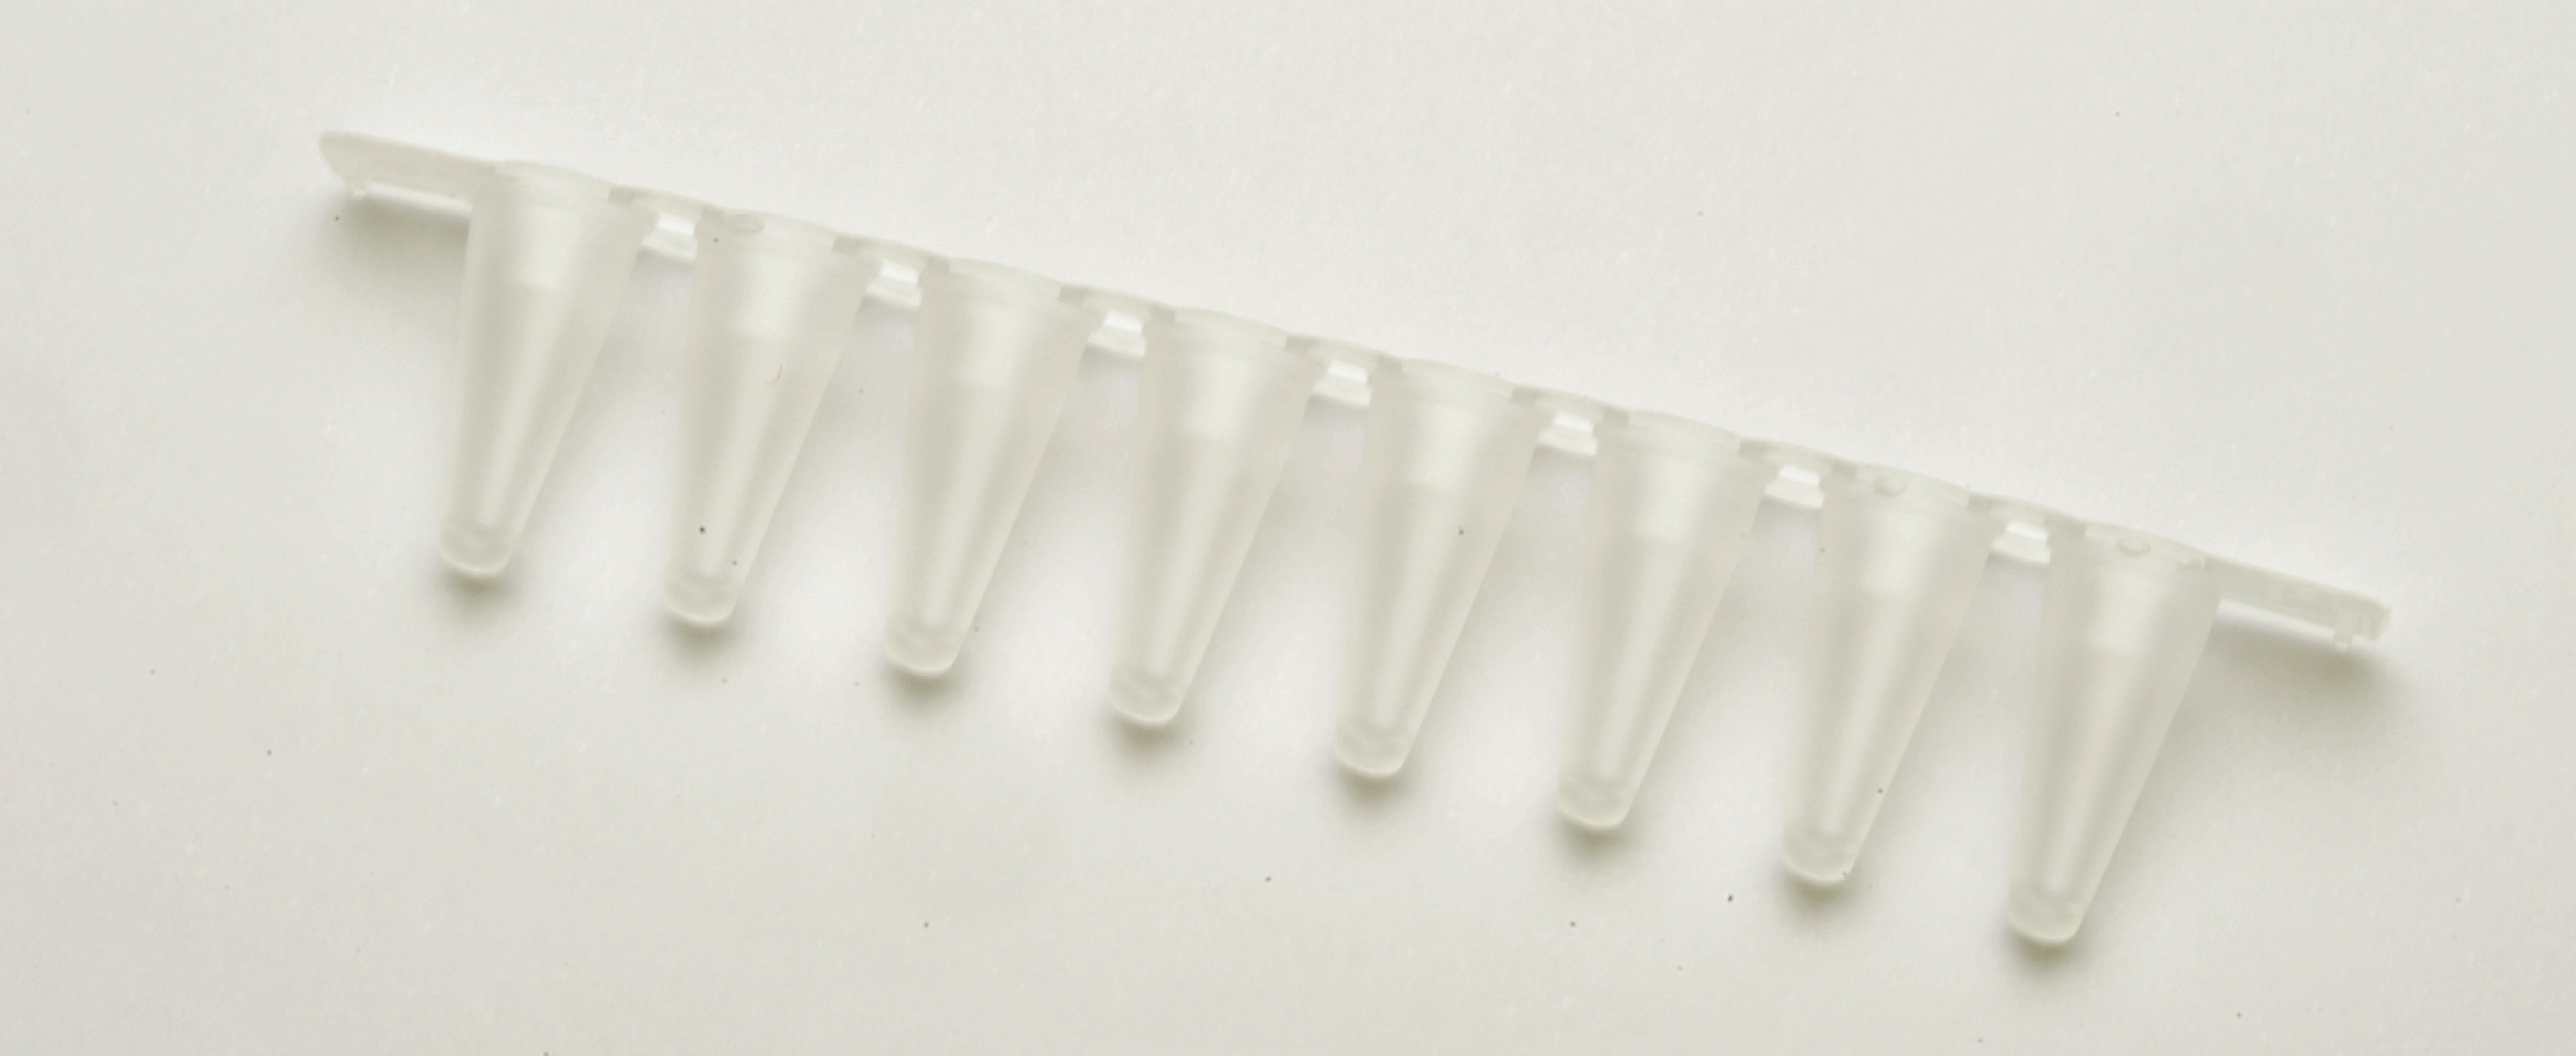 PCR tubes,0.1ml,8-strip format,BOX-120